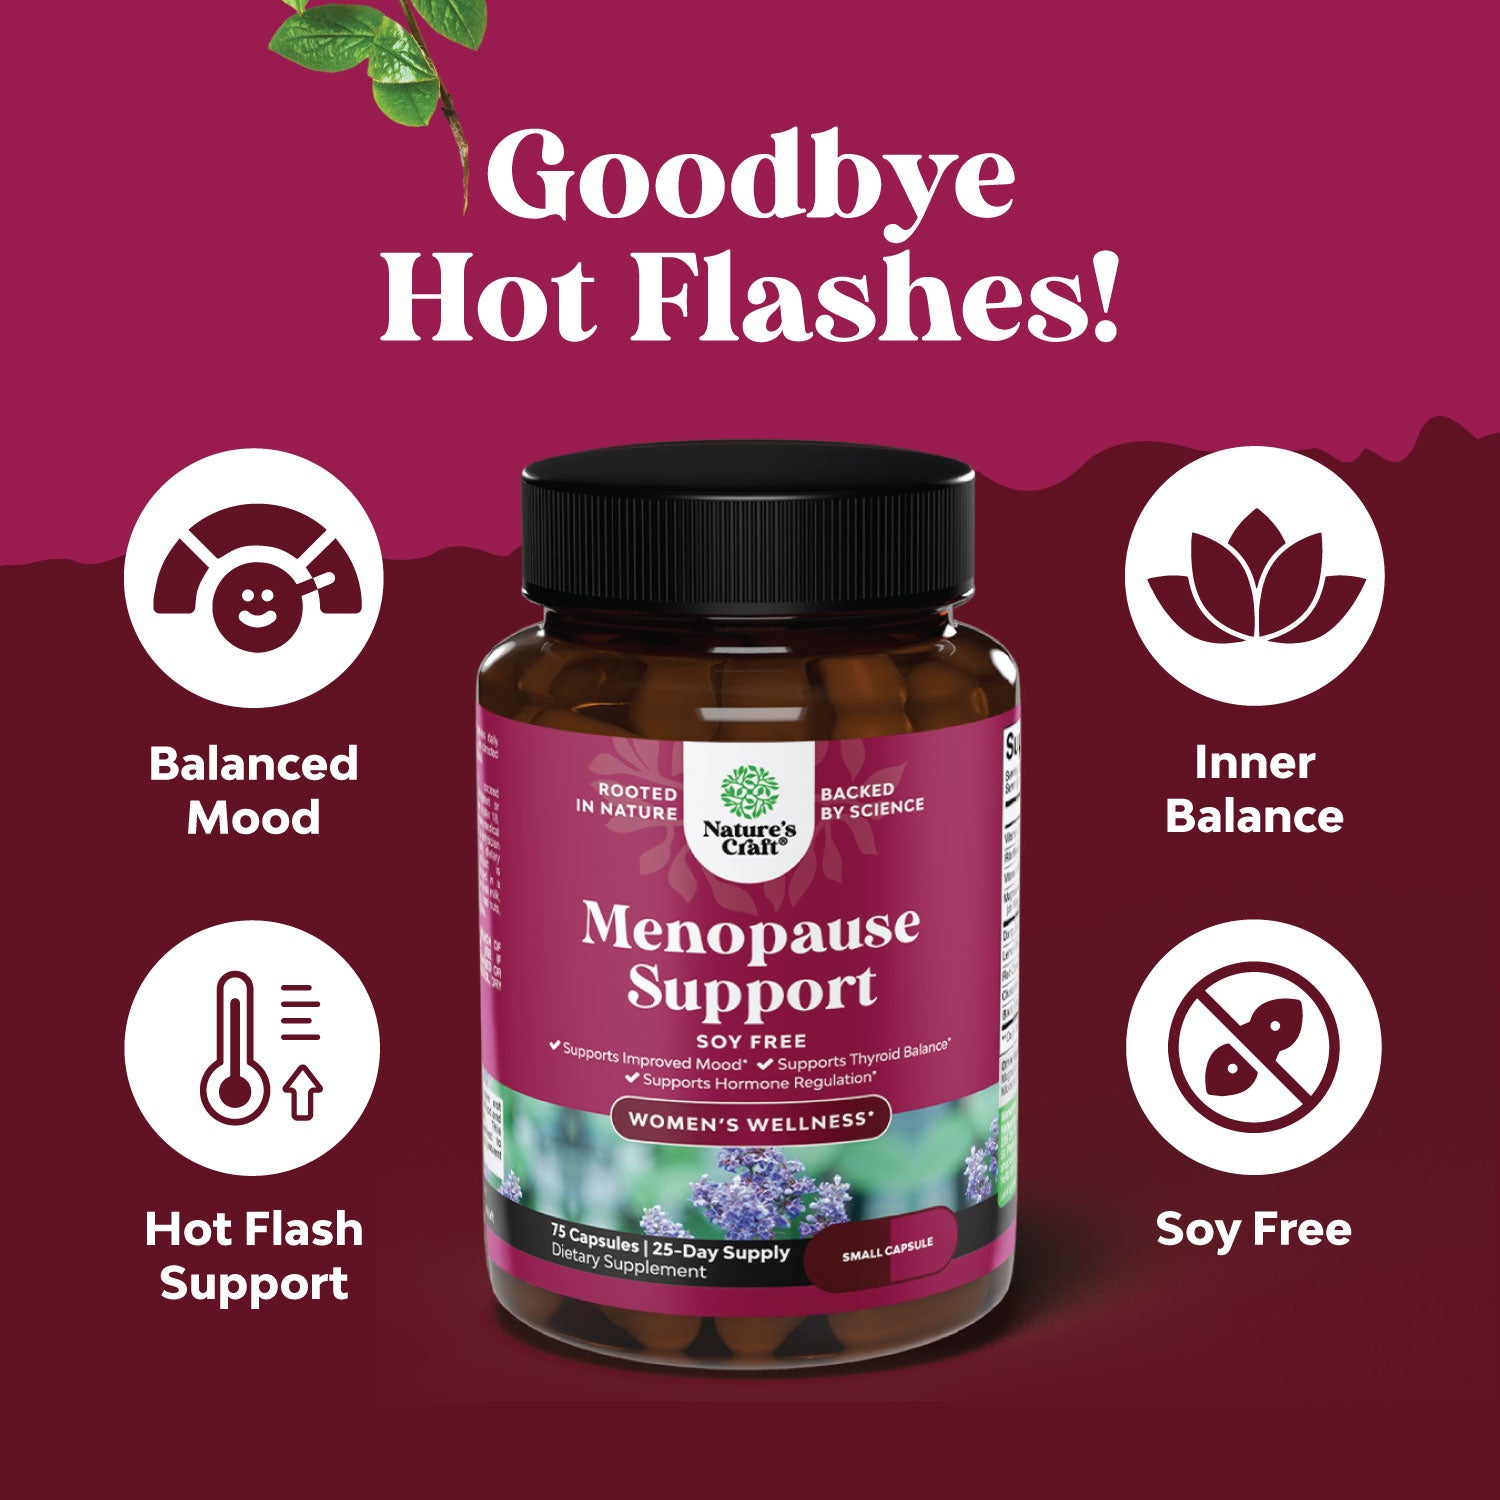 Menopause Support - 75 Capsules